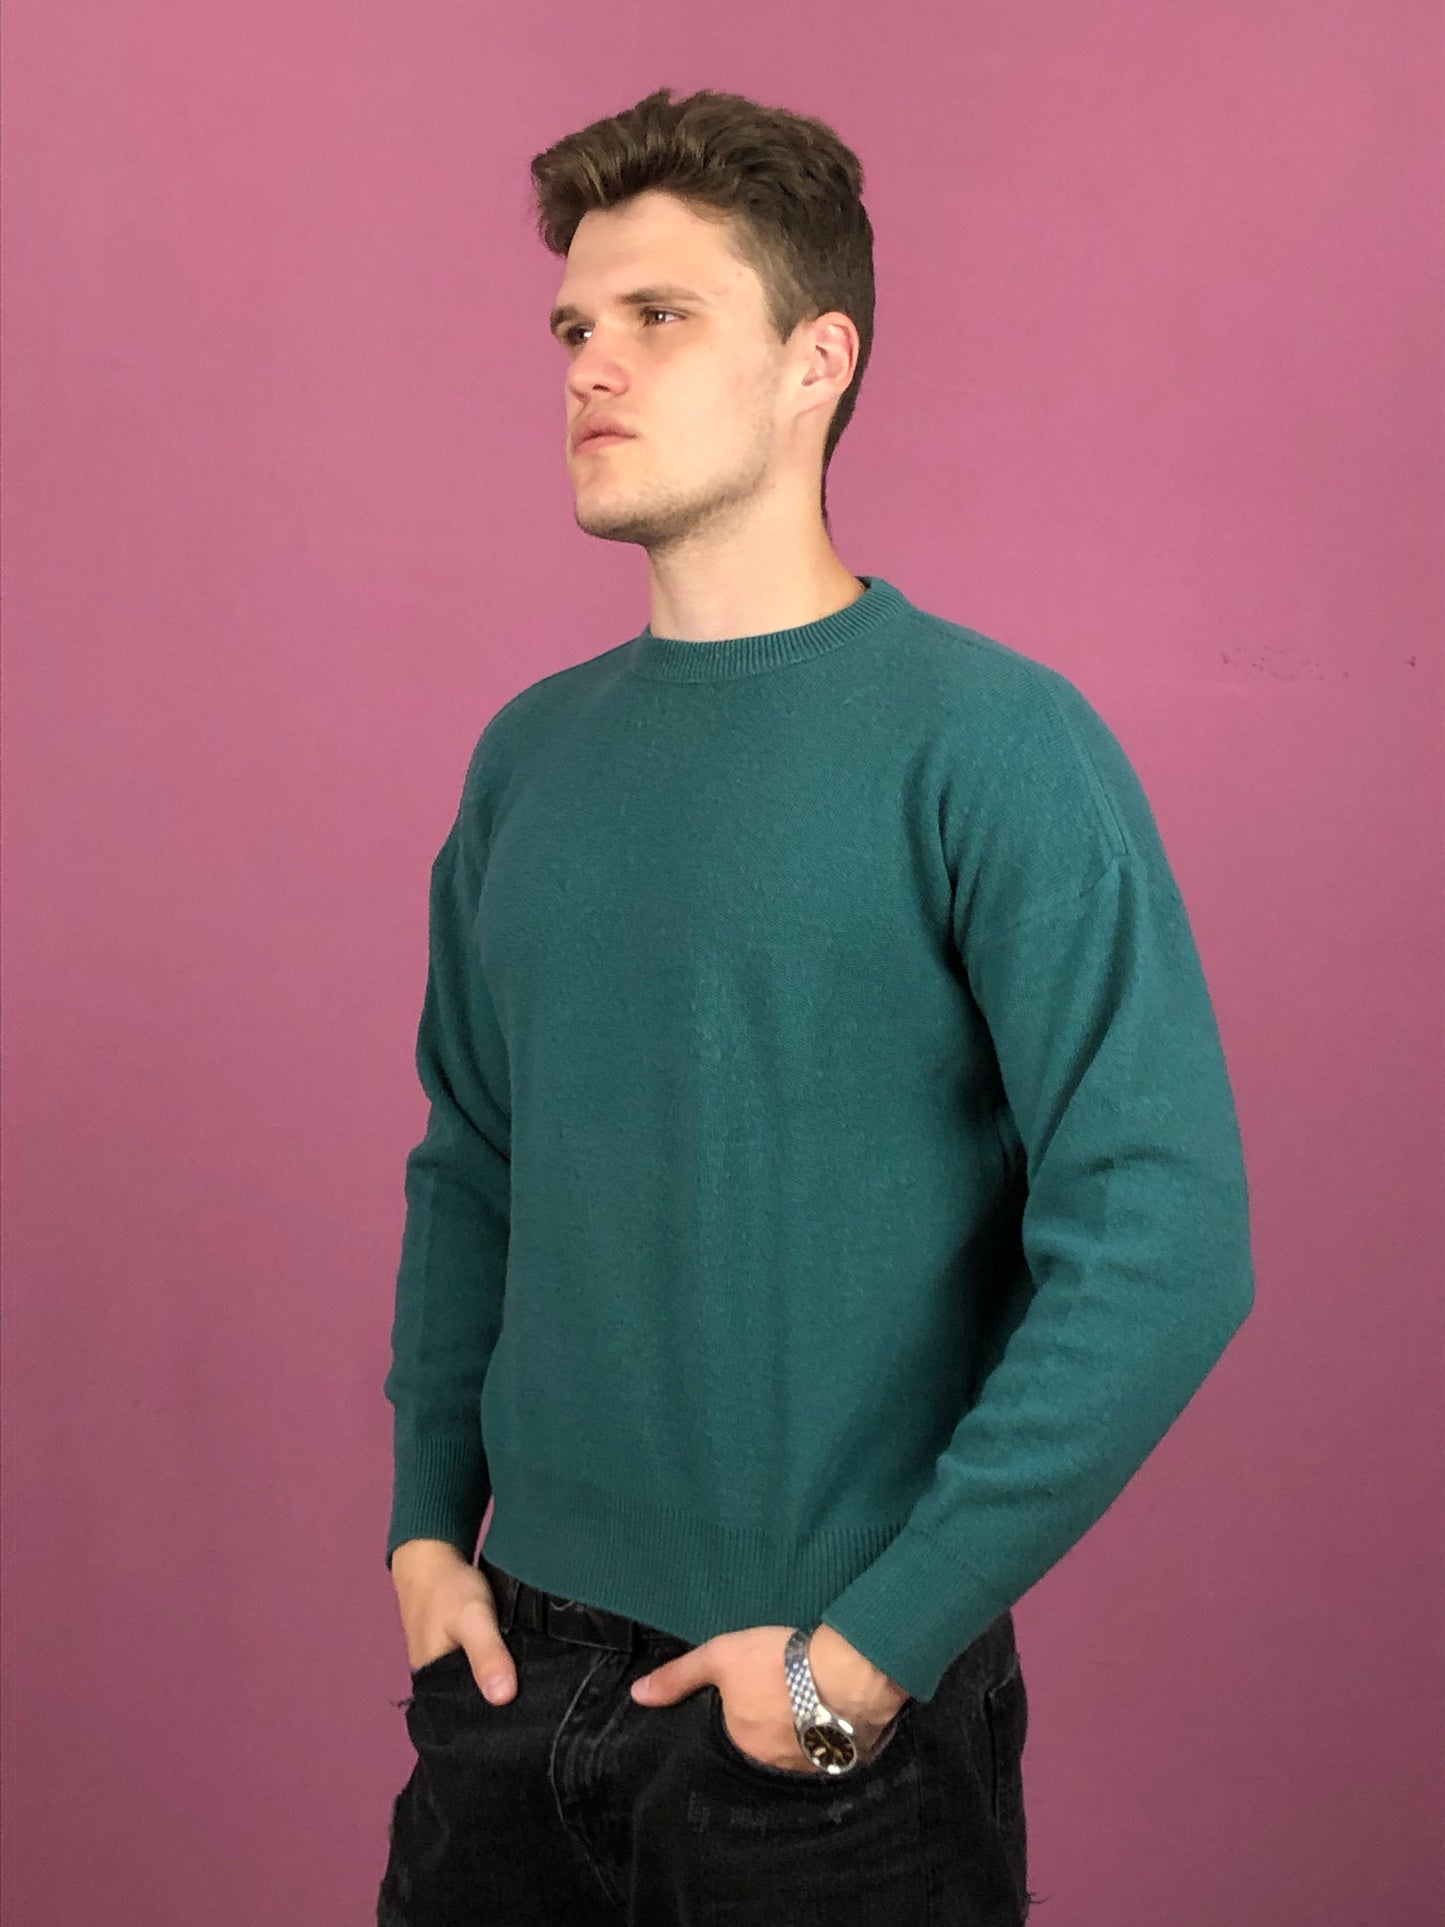 90s Lacoste Vintage Men's Sweater - Small Green Wool Blend